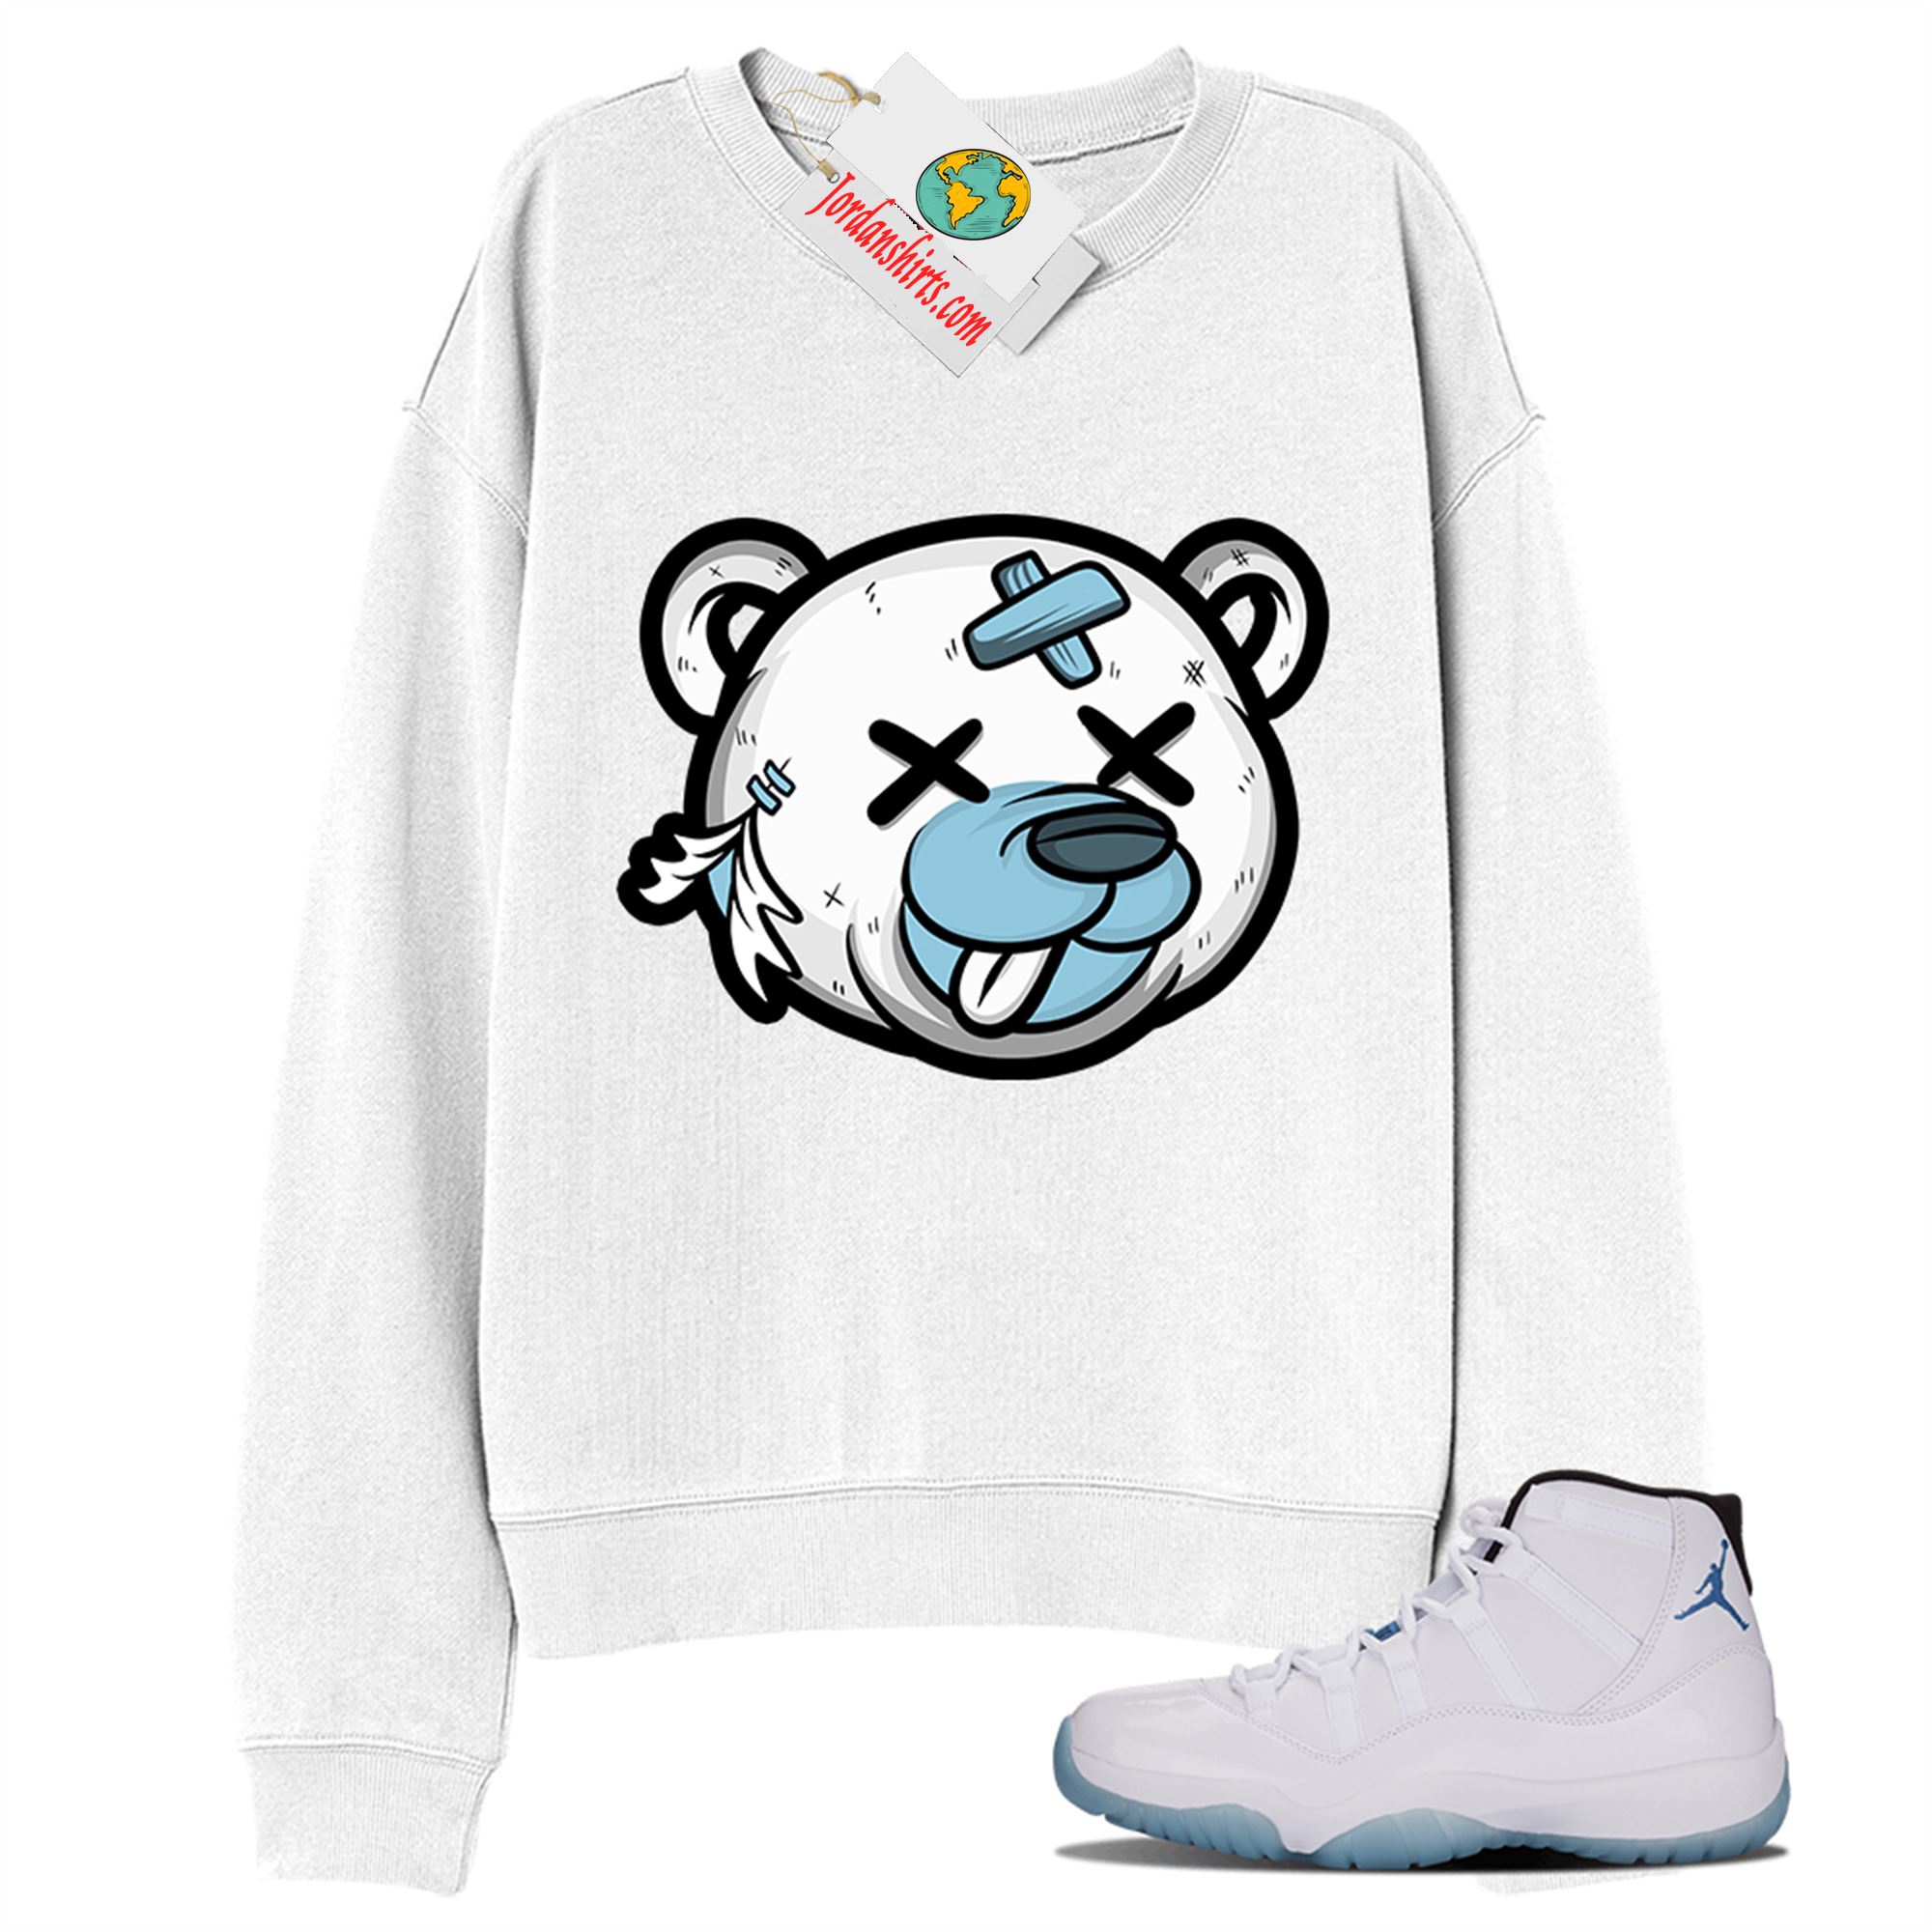 Jordan 11 Sweatshirt, Teddy Bear Head White Sweatshirt Air Jordan 11 Legend Blue 11s Full Size Up To 5xl